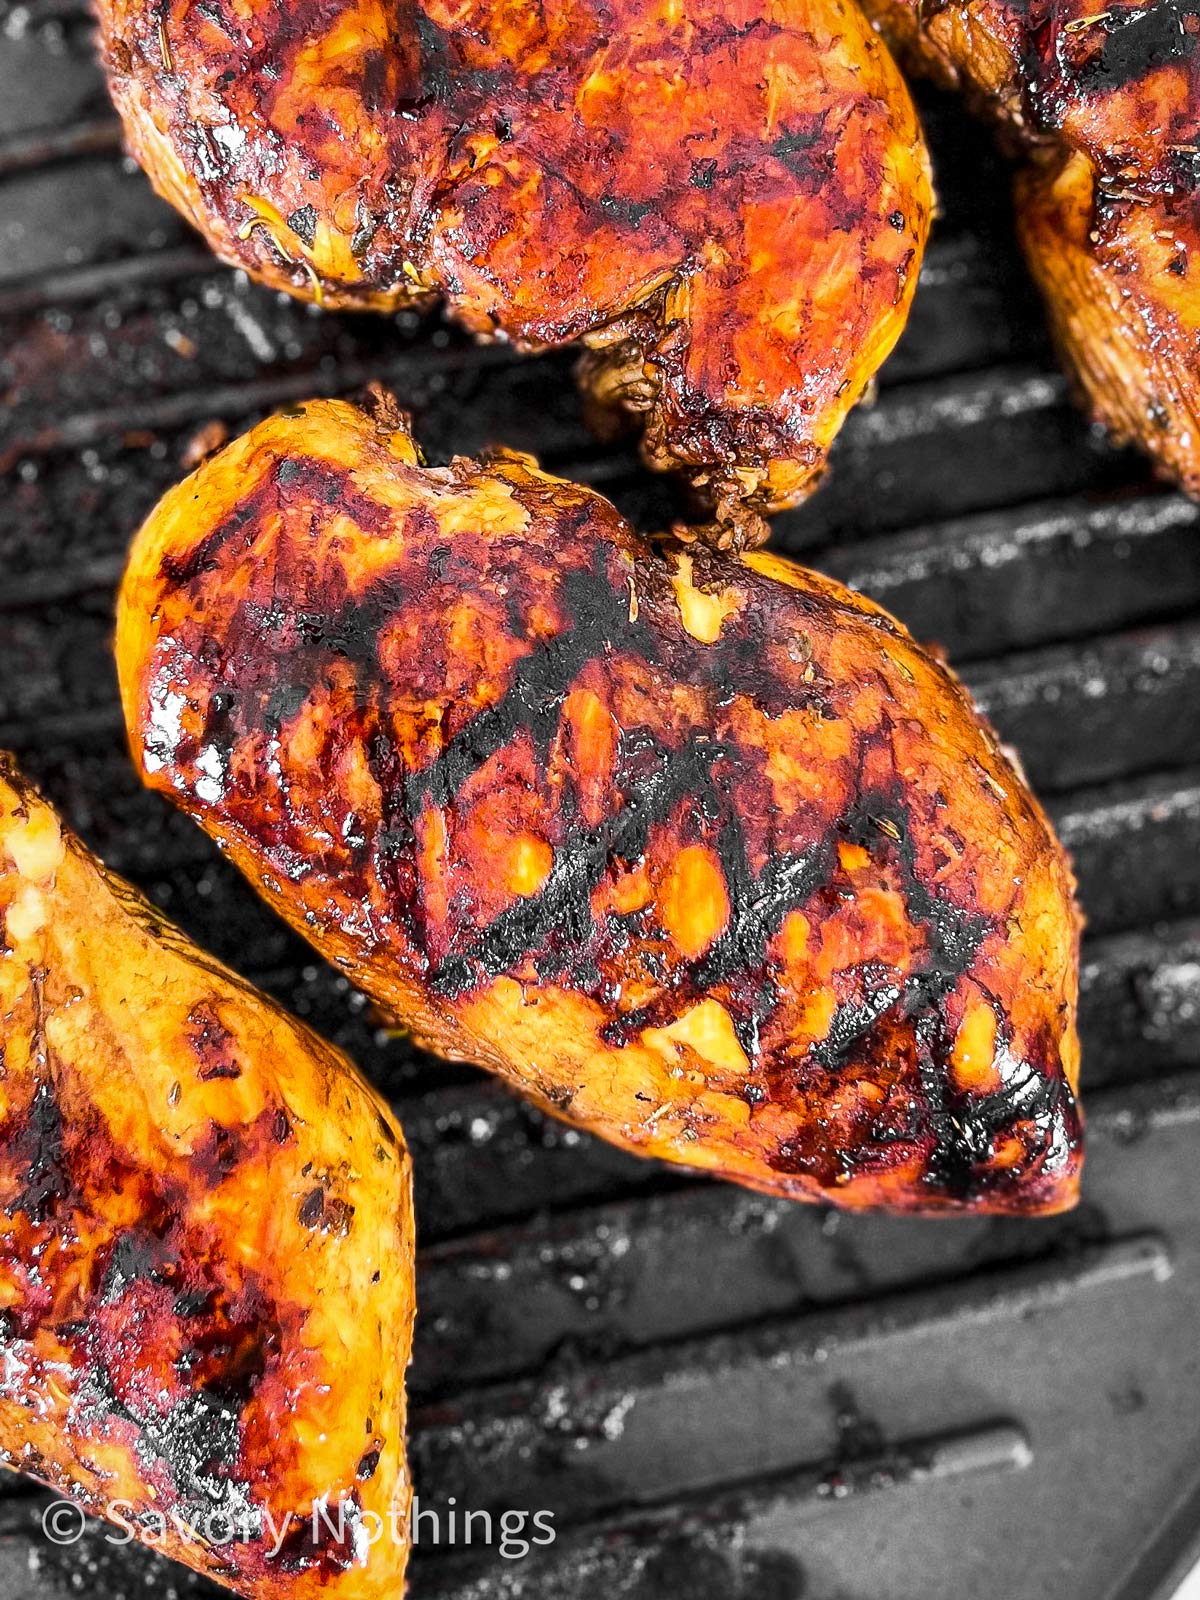 https://www.savorynothings.com/wp-content/uploads/2022/05/balsamic-chicken-marinade-recipe-image-step-5.jpg